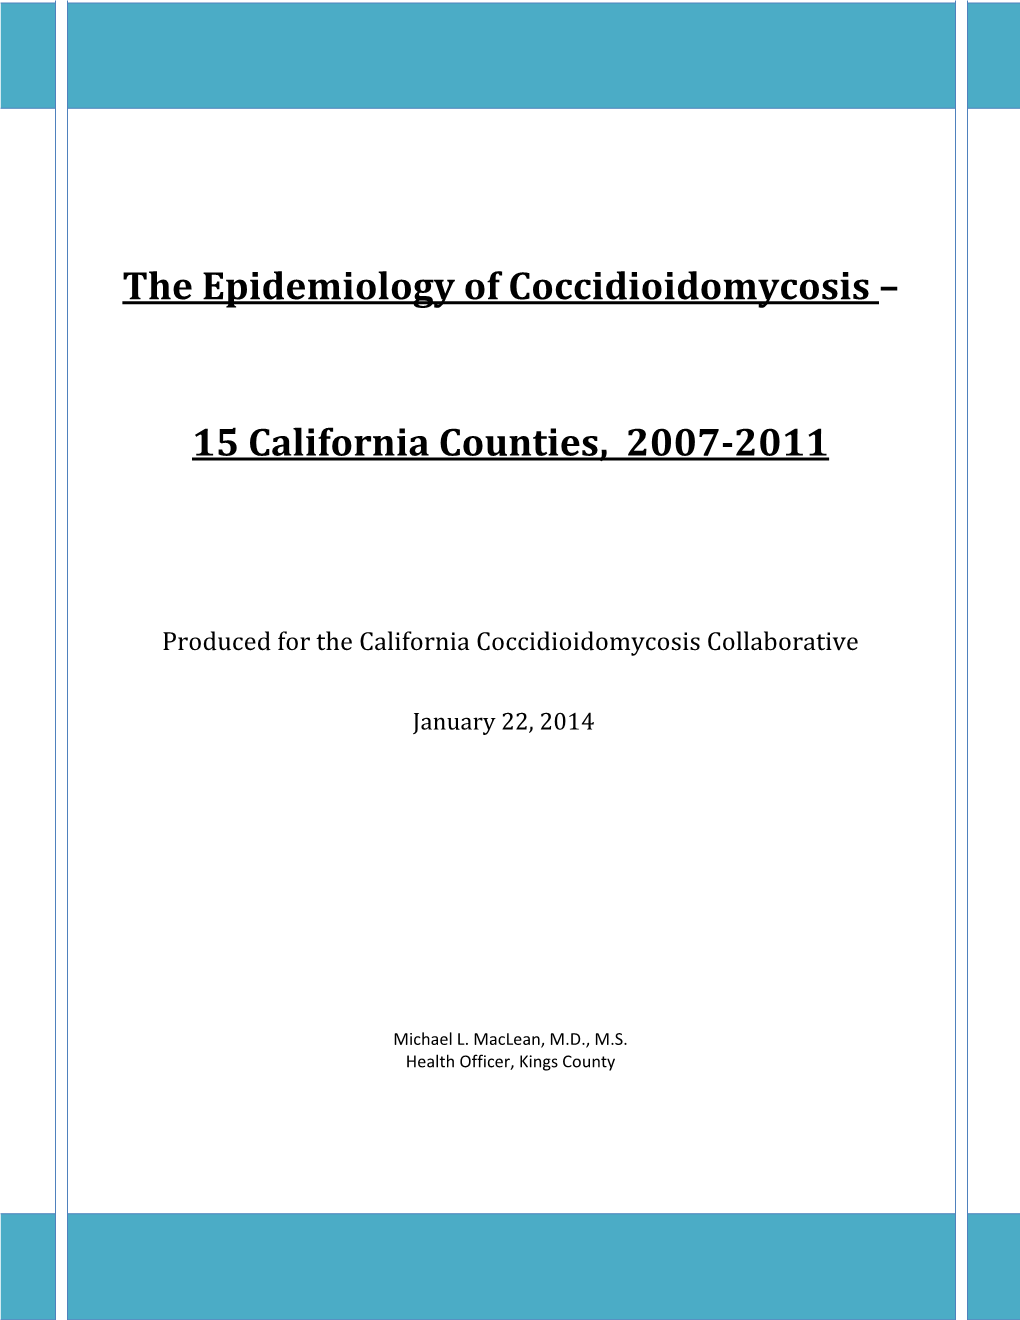 The Epidemiology of Coccidioidomycosis